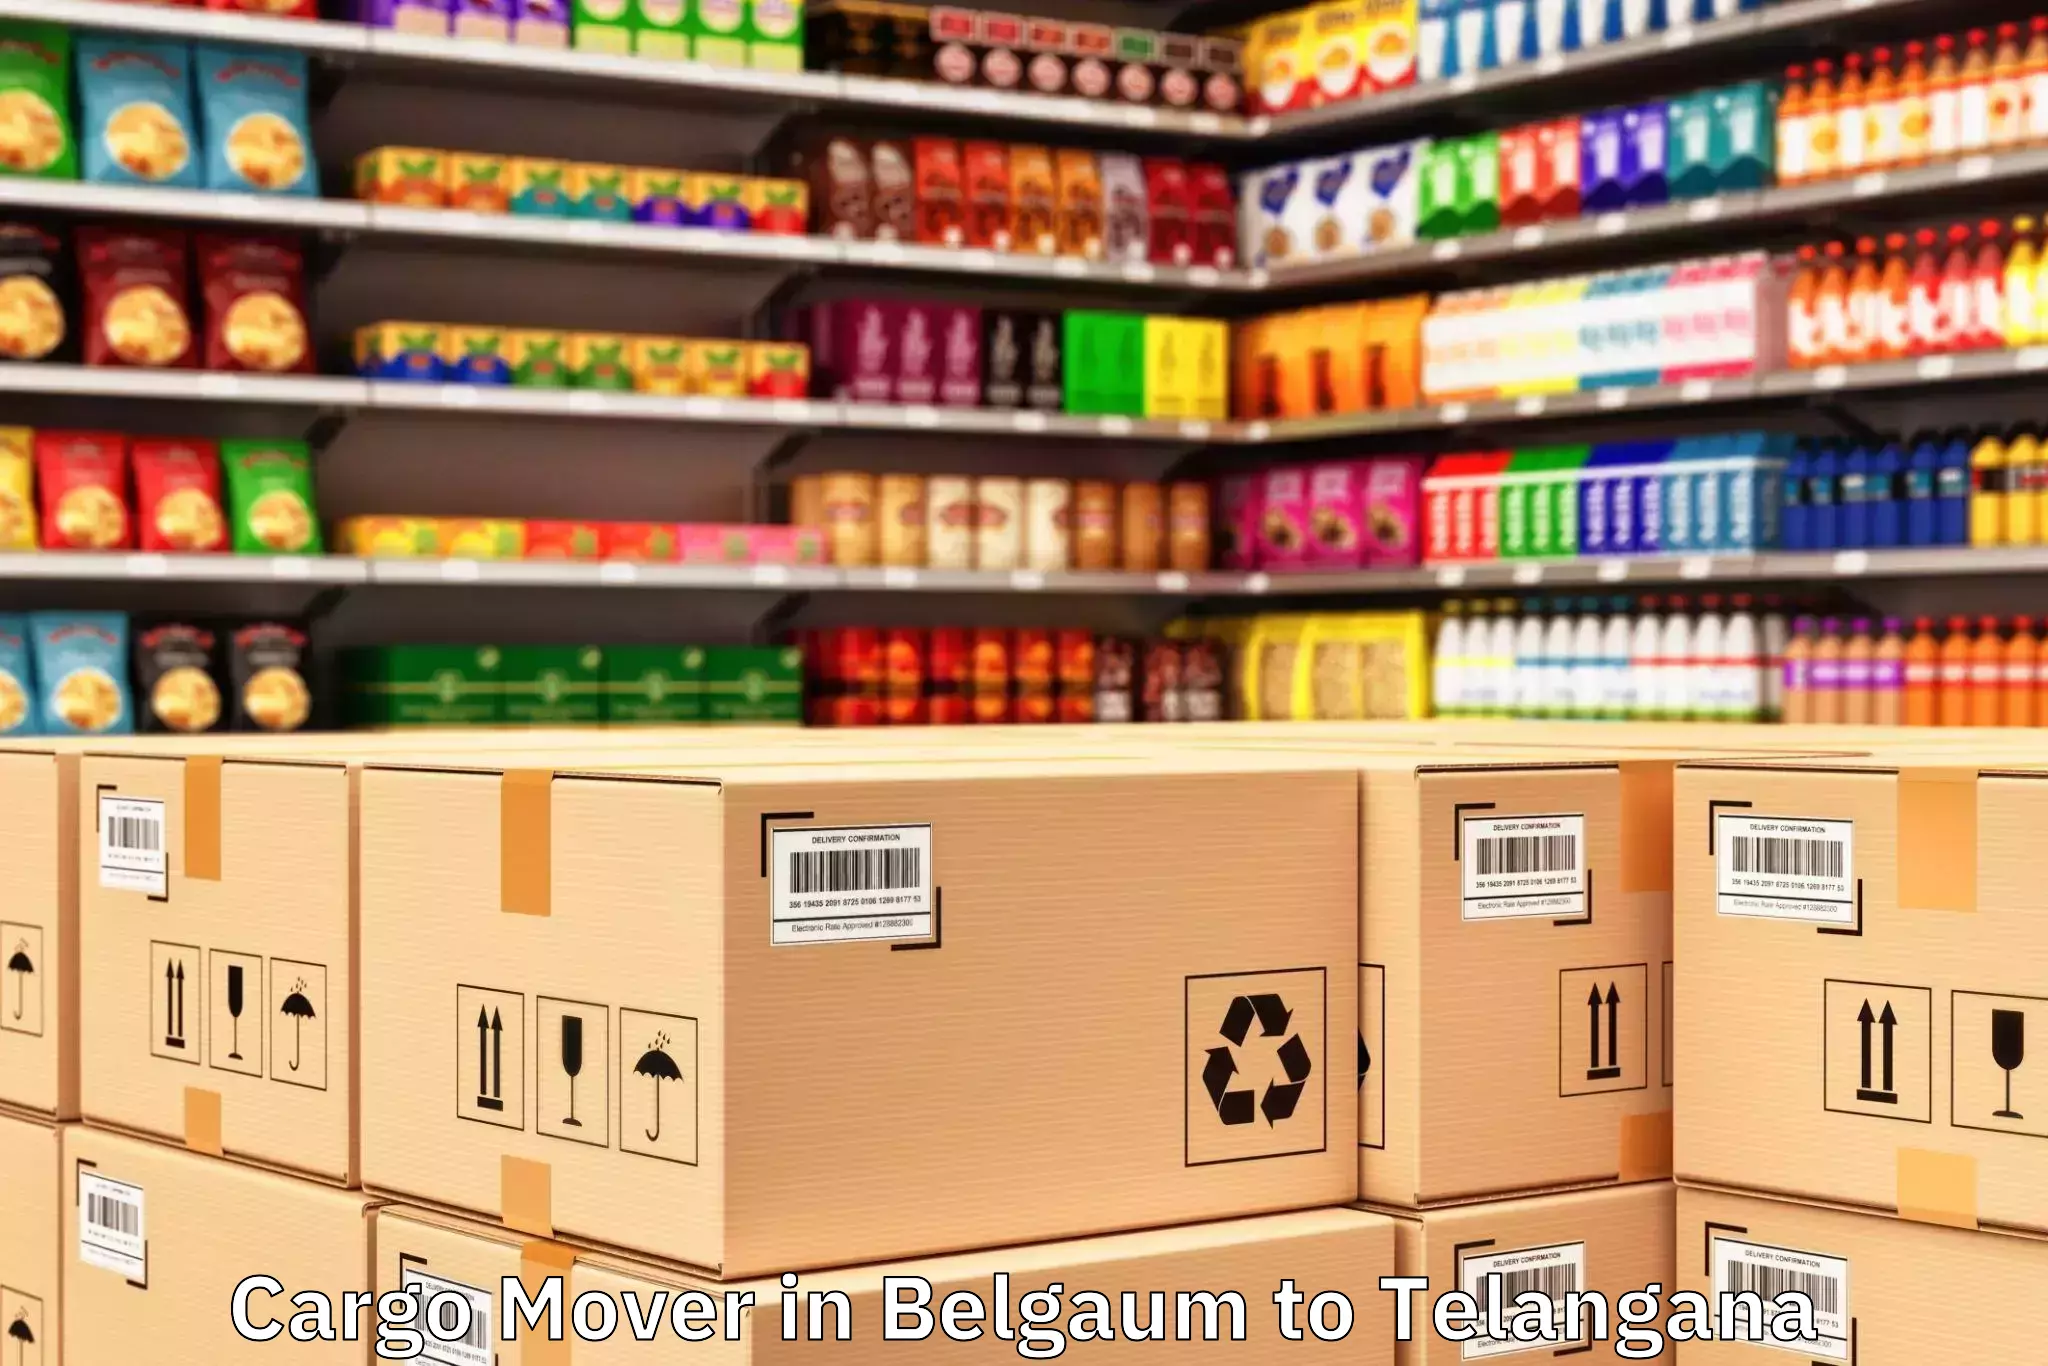 Belgaum to Neredcherla Cargo Mover Booking